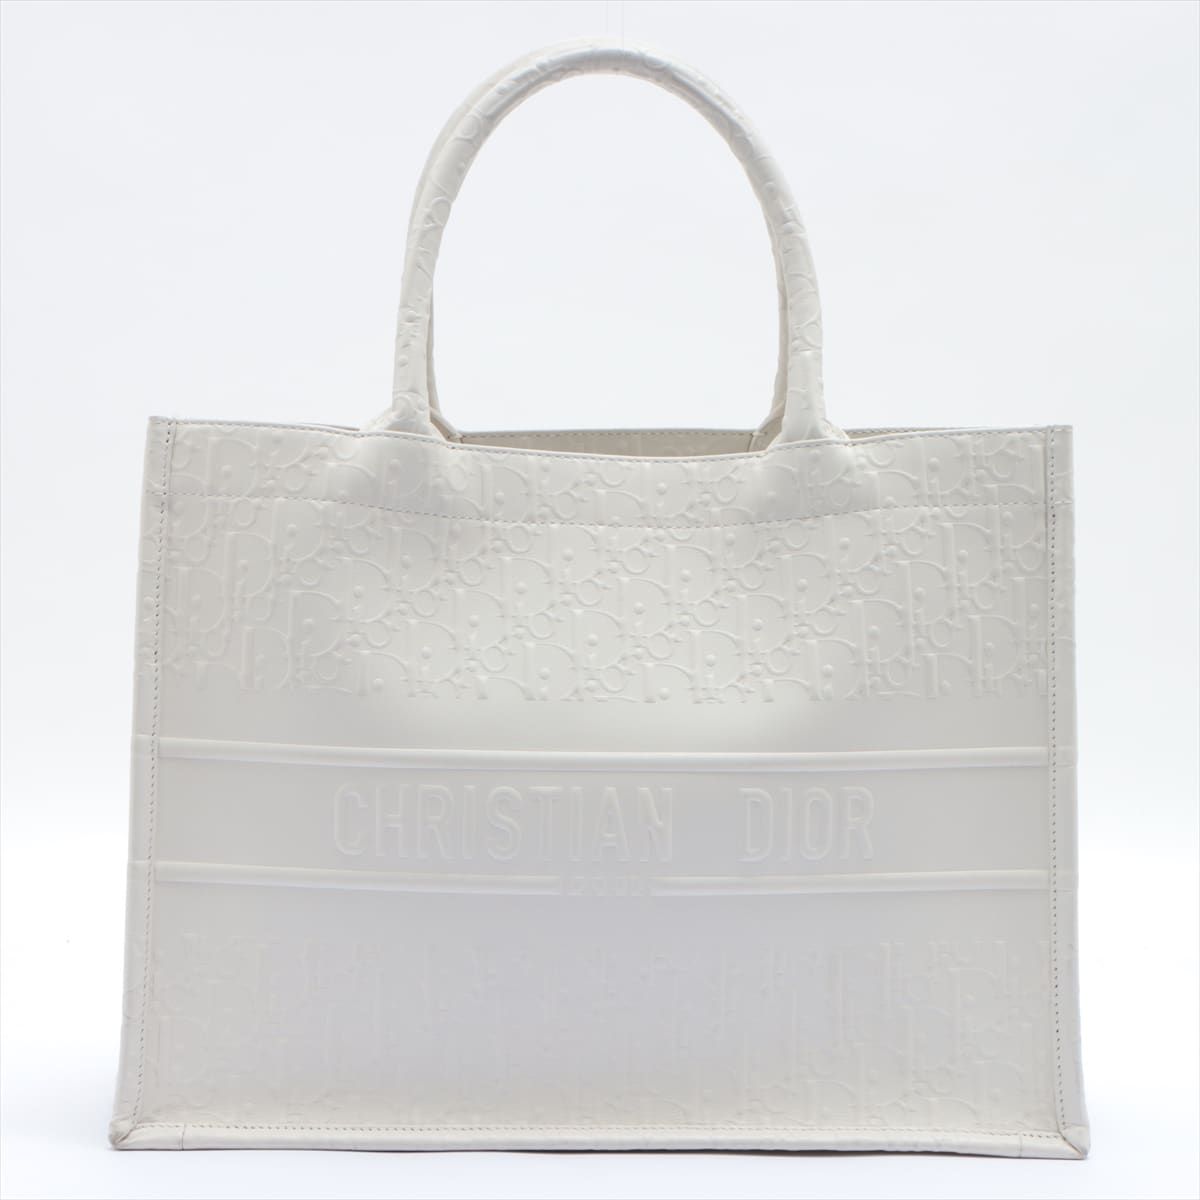 Christian Dior Book Tote Leather Tote bag White